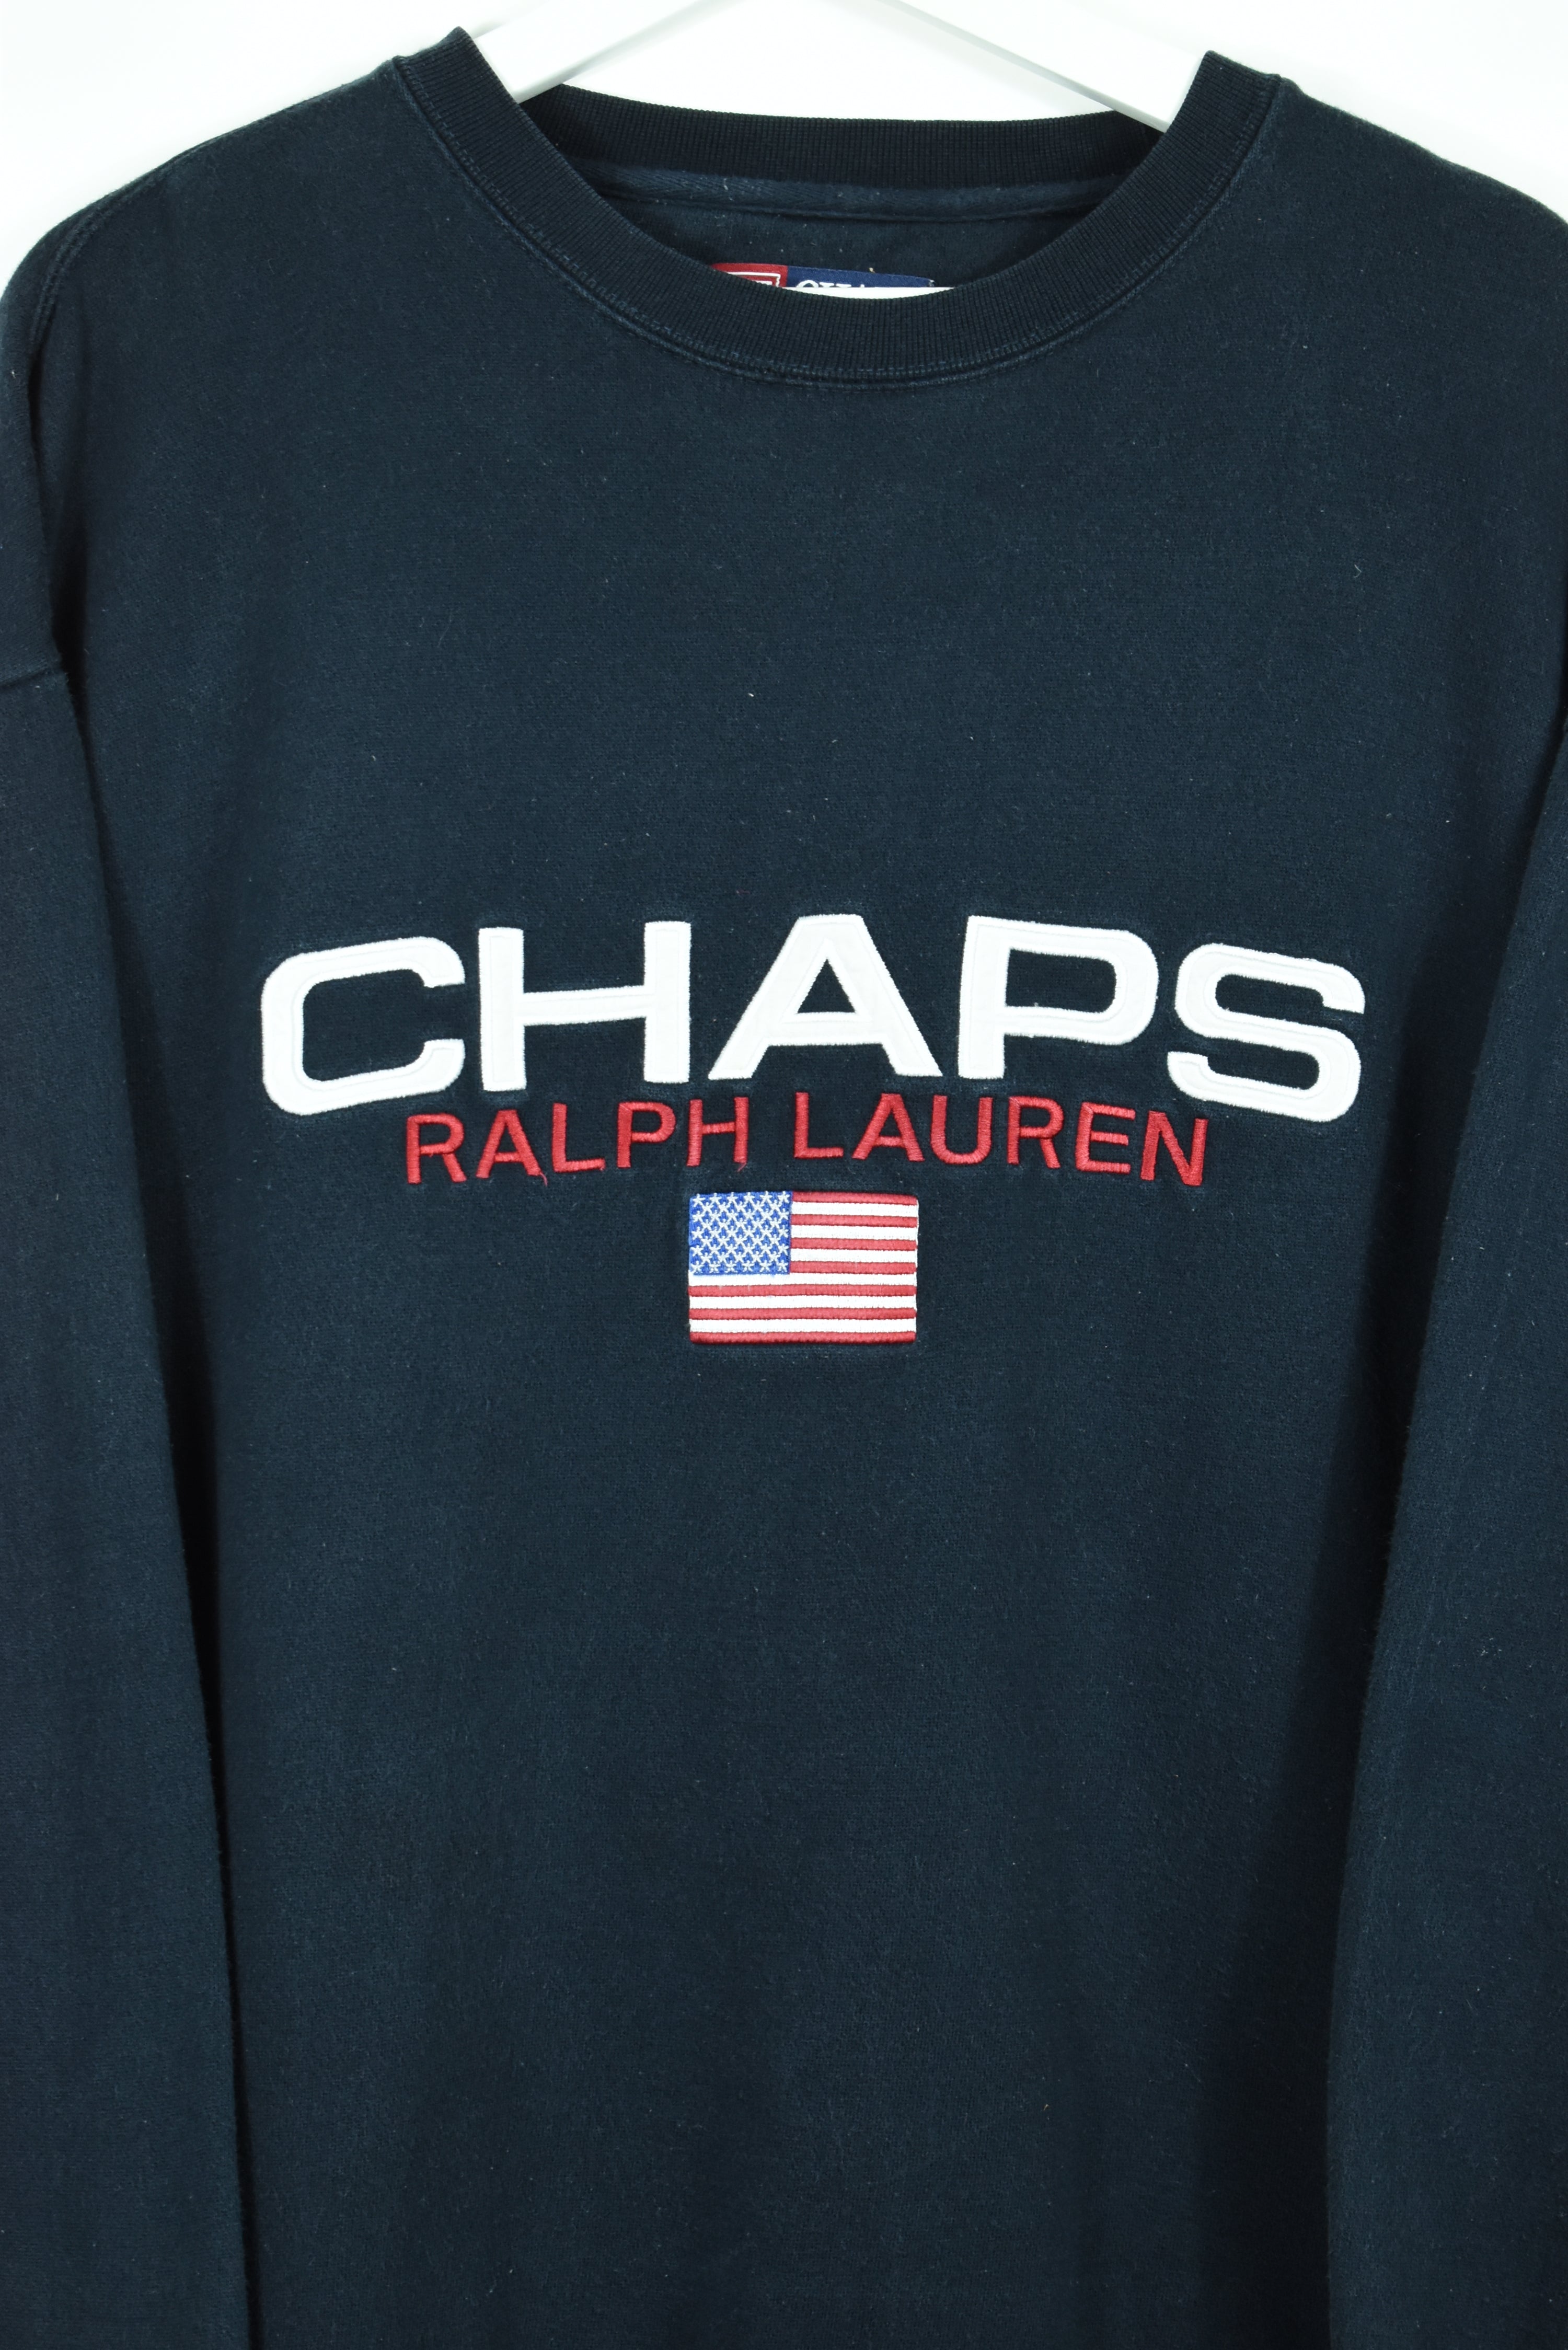 Vintage Chaps Ralph Lauren Embroidery Sweatshirt Xlarge